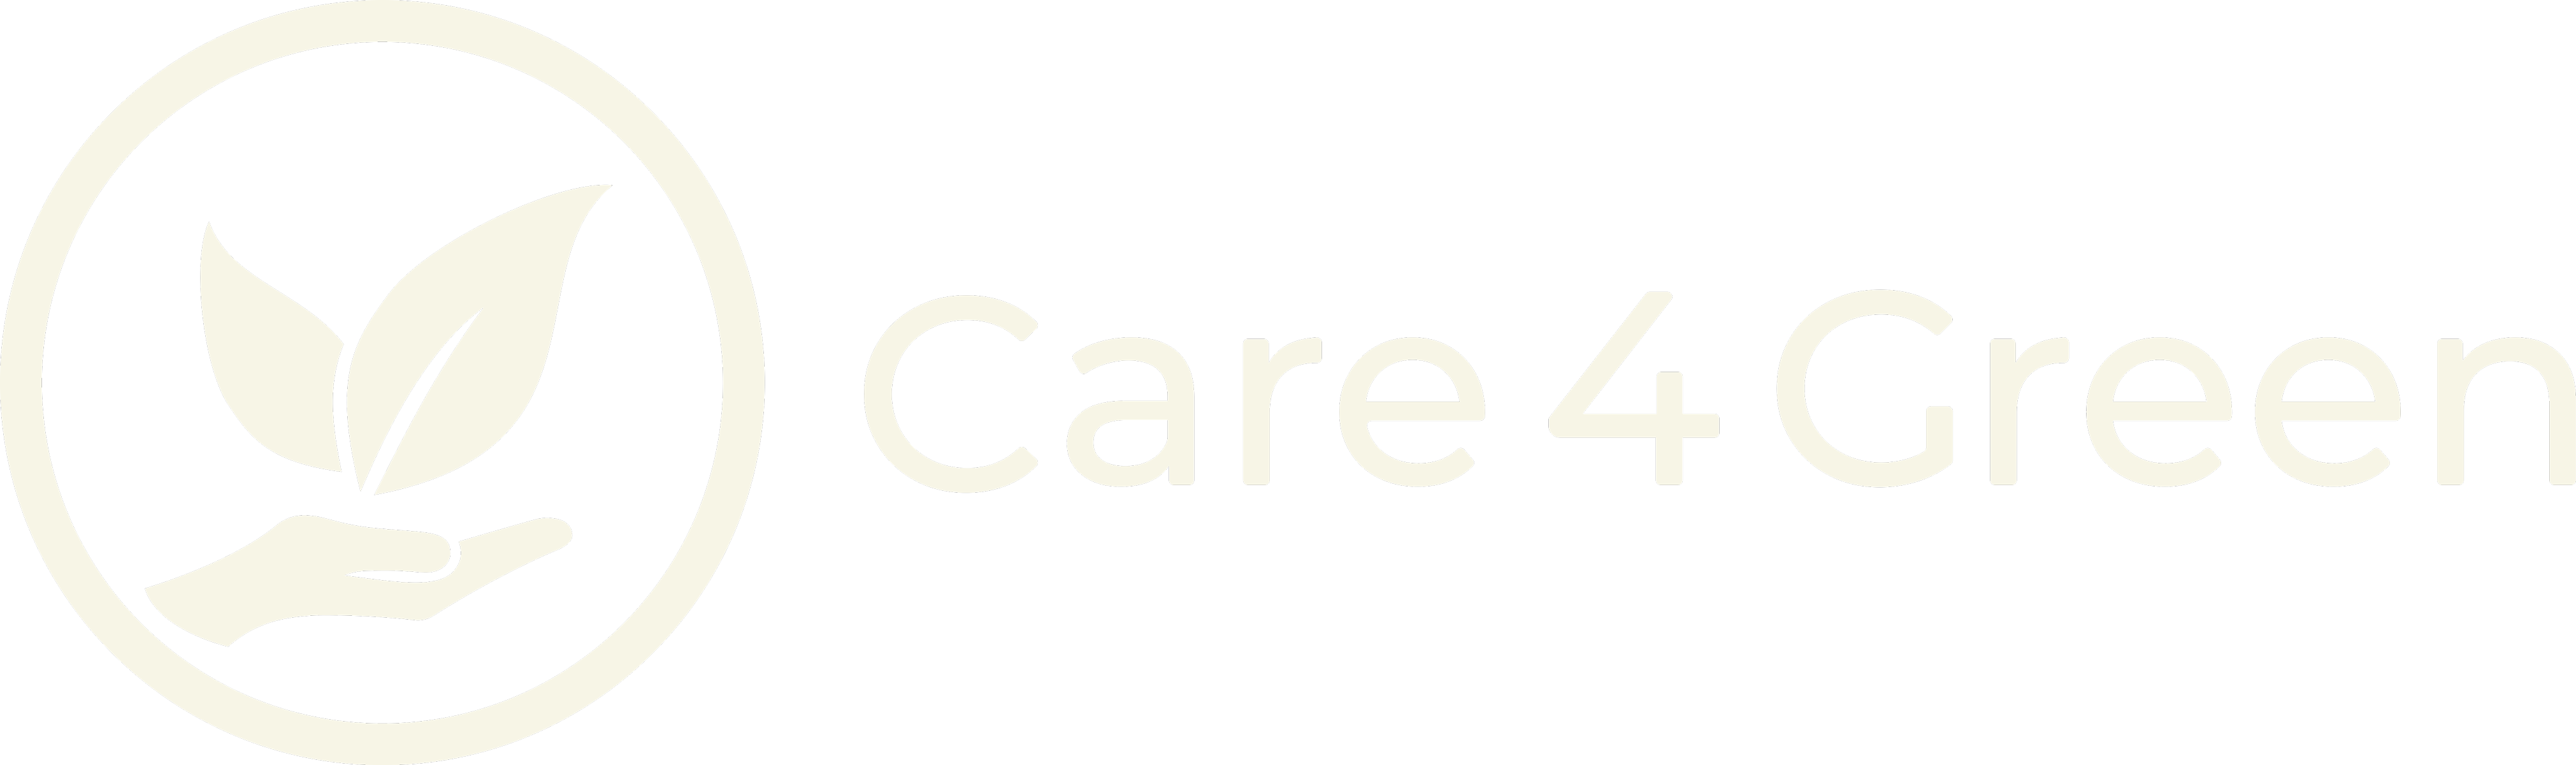 Care4GREEN